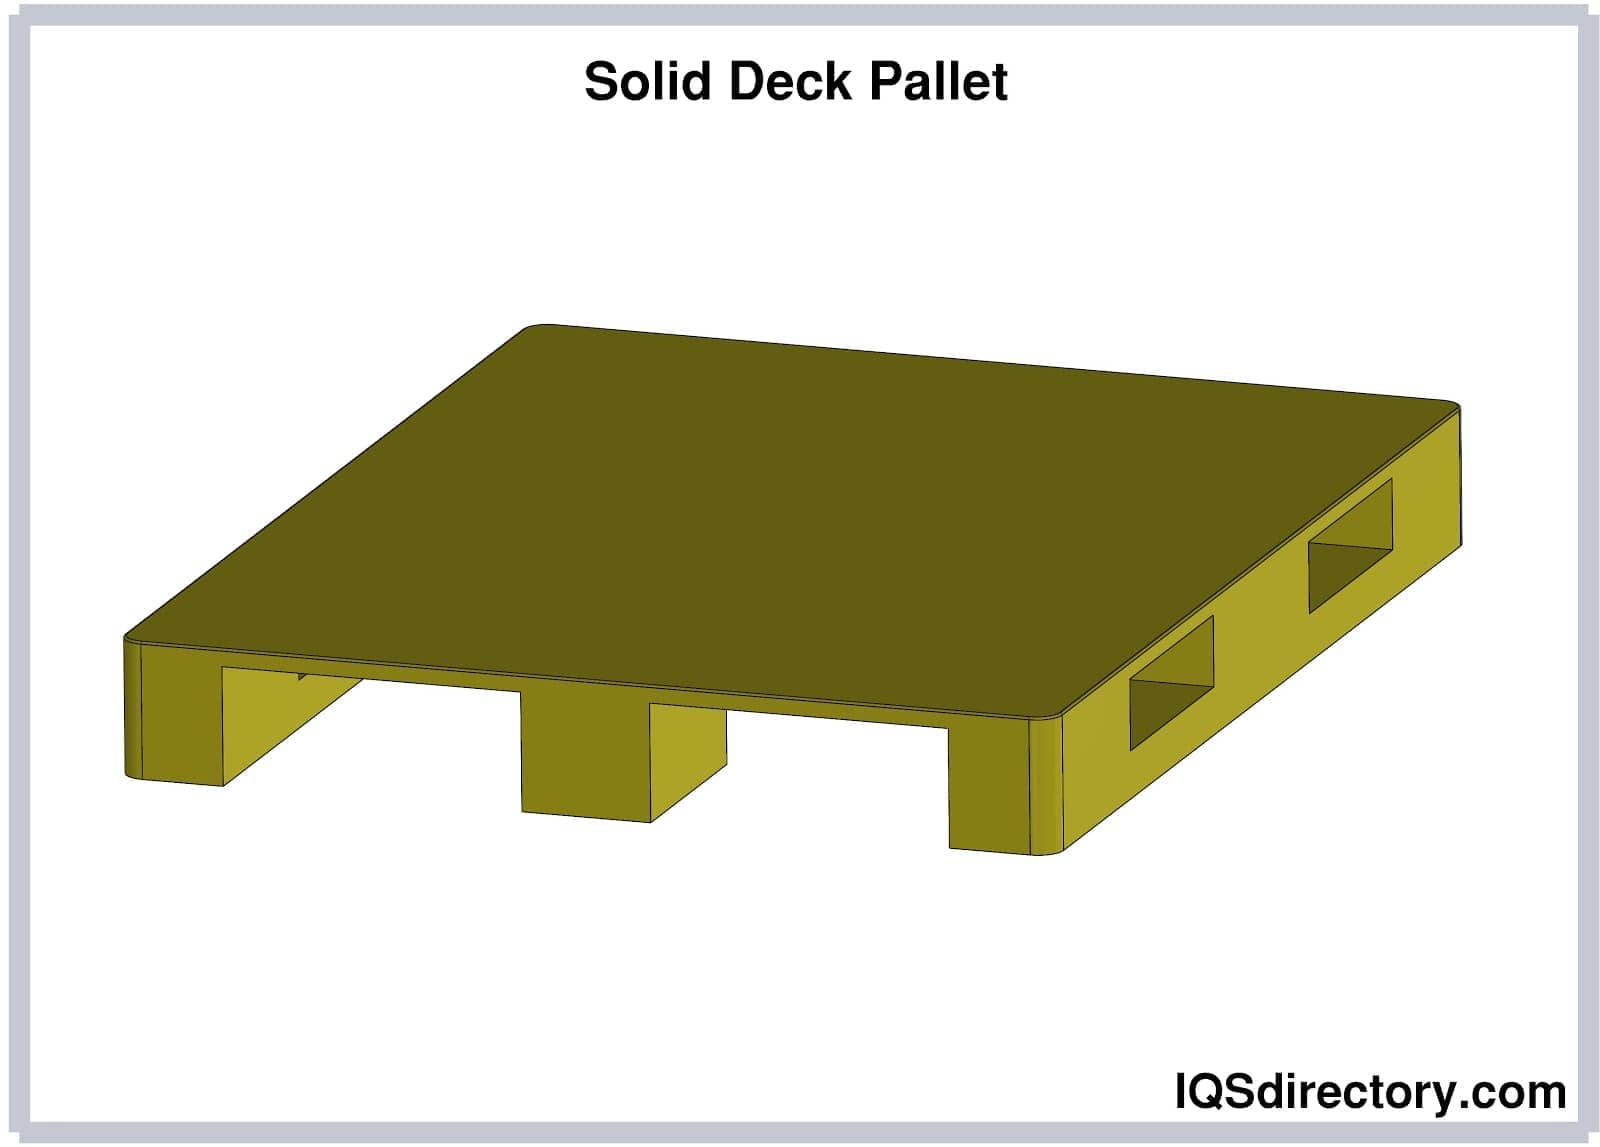 Solid Deck Pallet